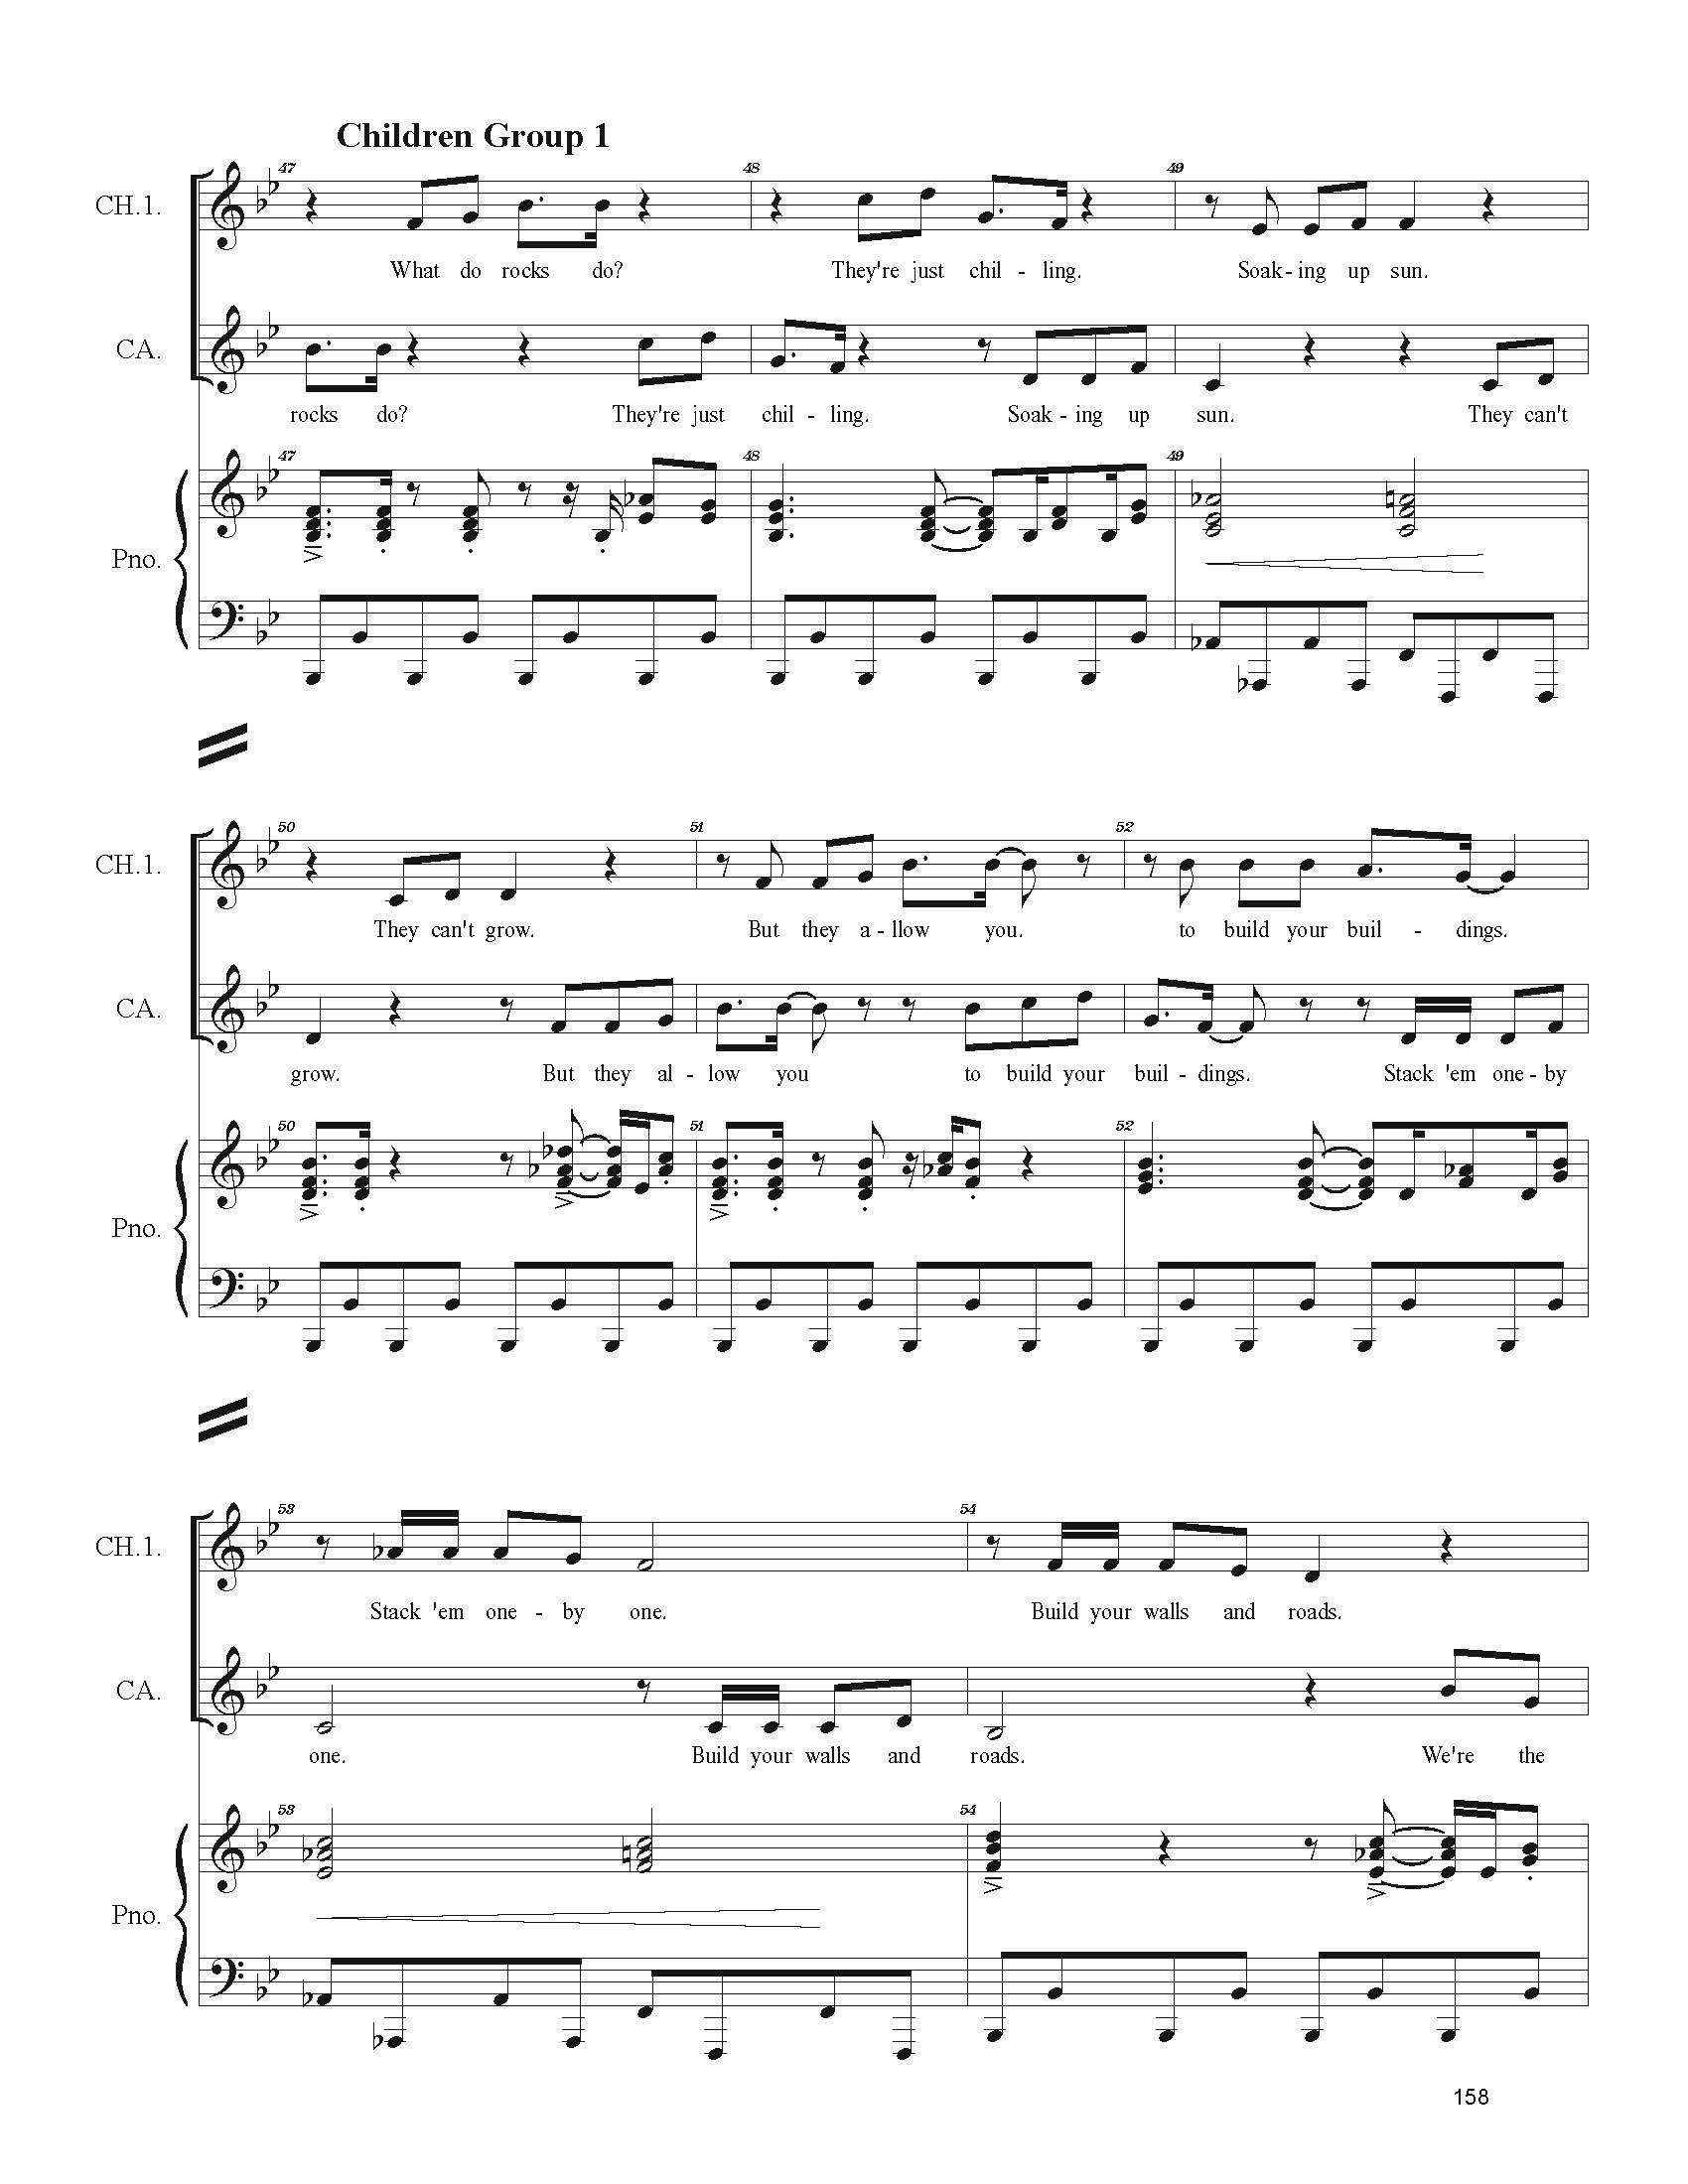 FULL PIANO VOCAL SCORE DRAFT 1 - Score_Page_158.jpg